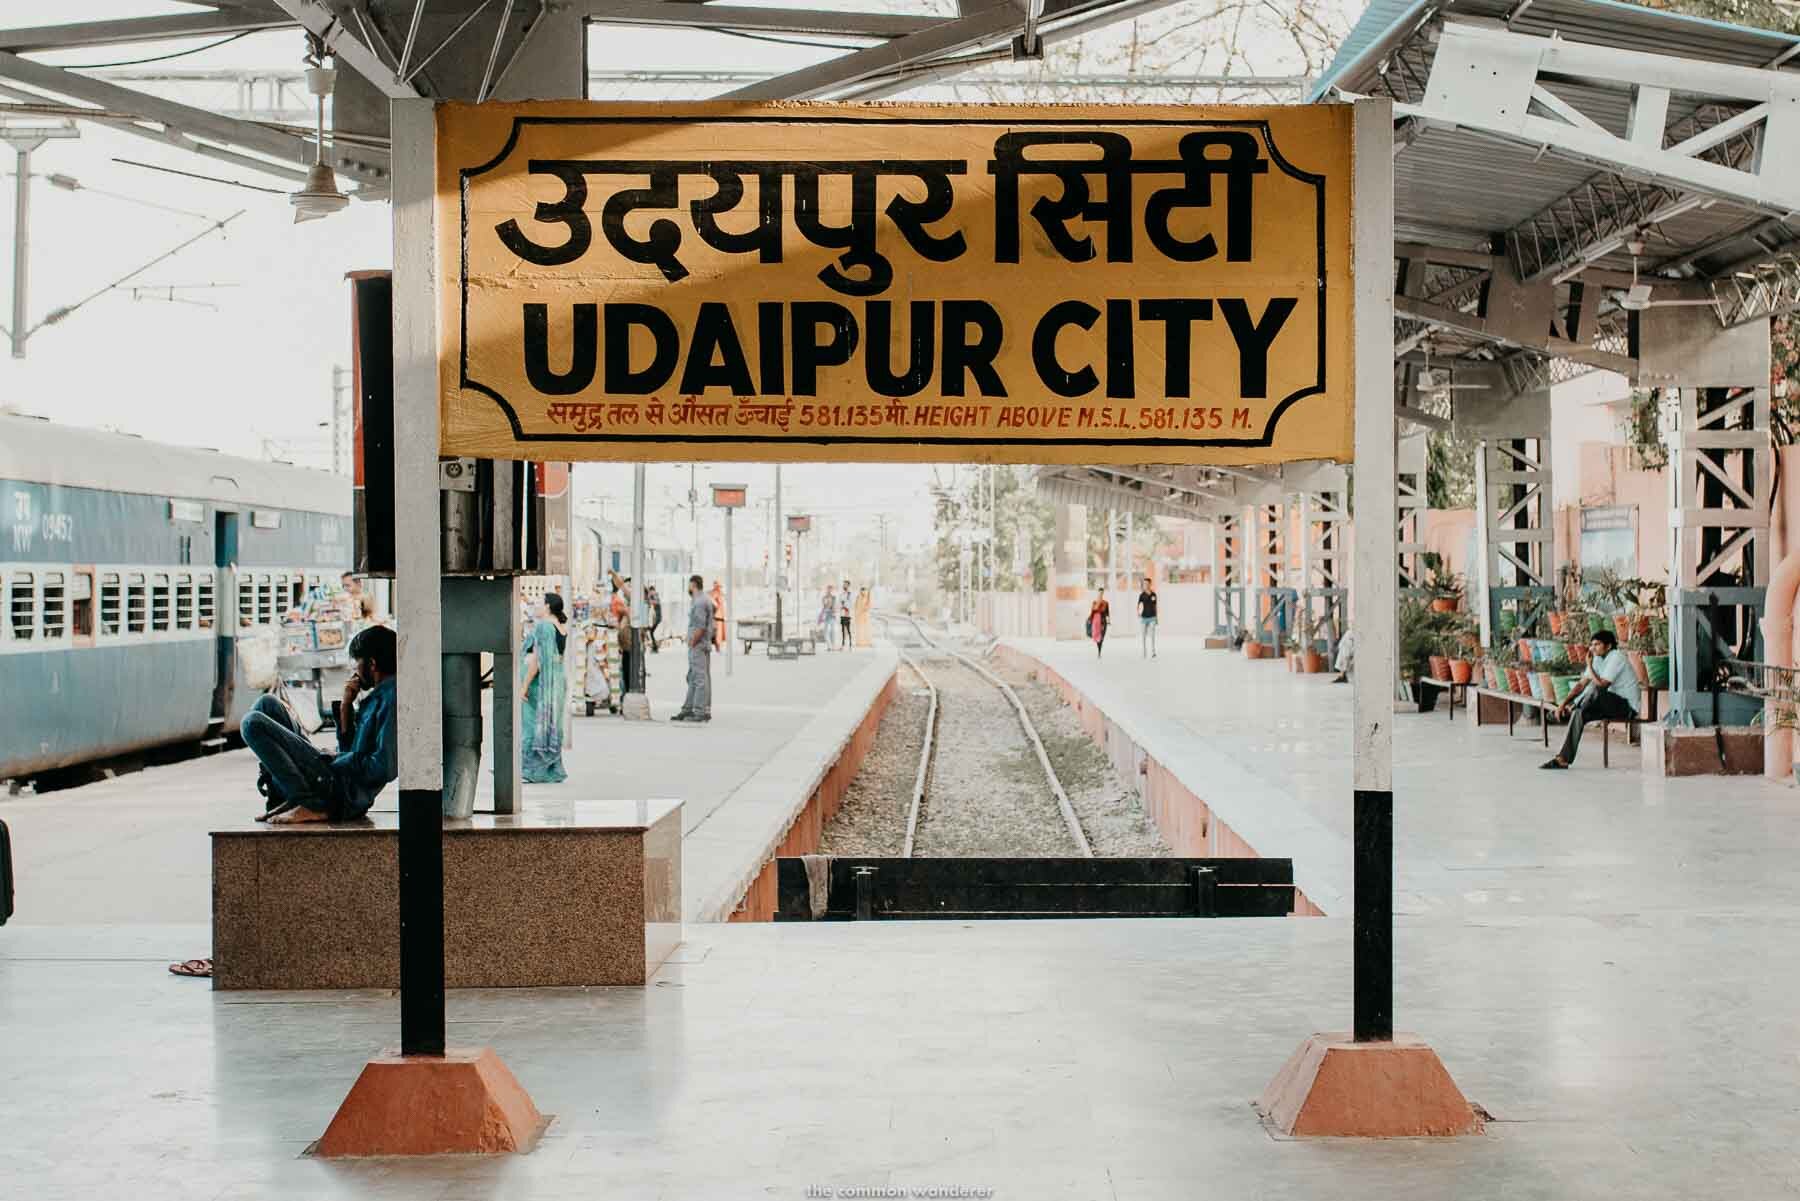 Udaipur city railway station